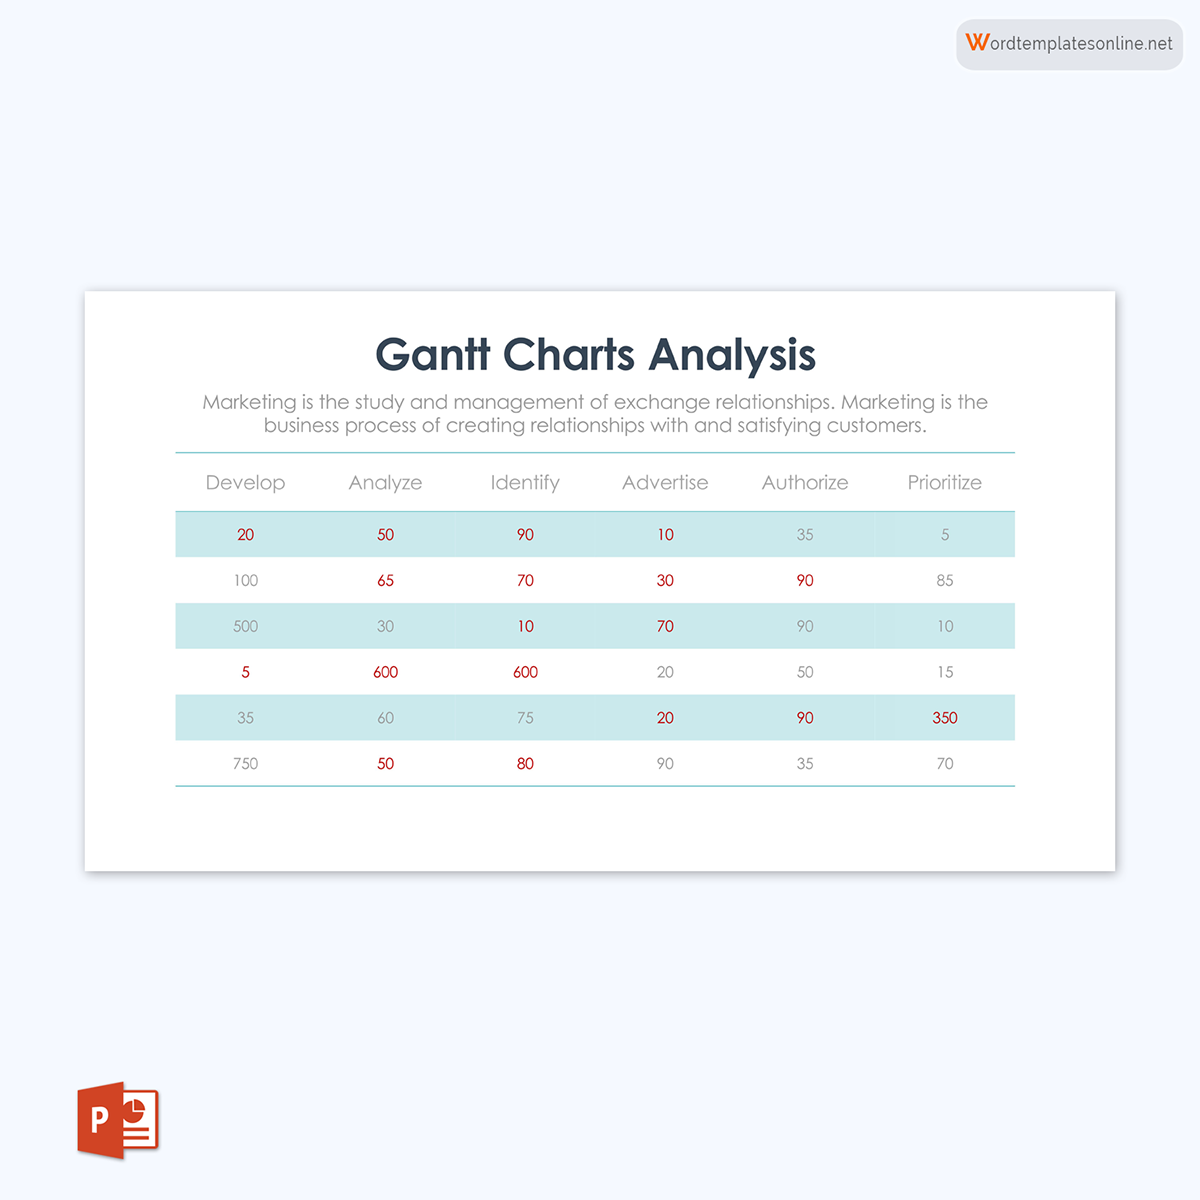 Professional Editable Gantt Chart Analysis Template 07 as PowerPoint Slides